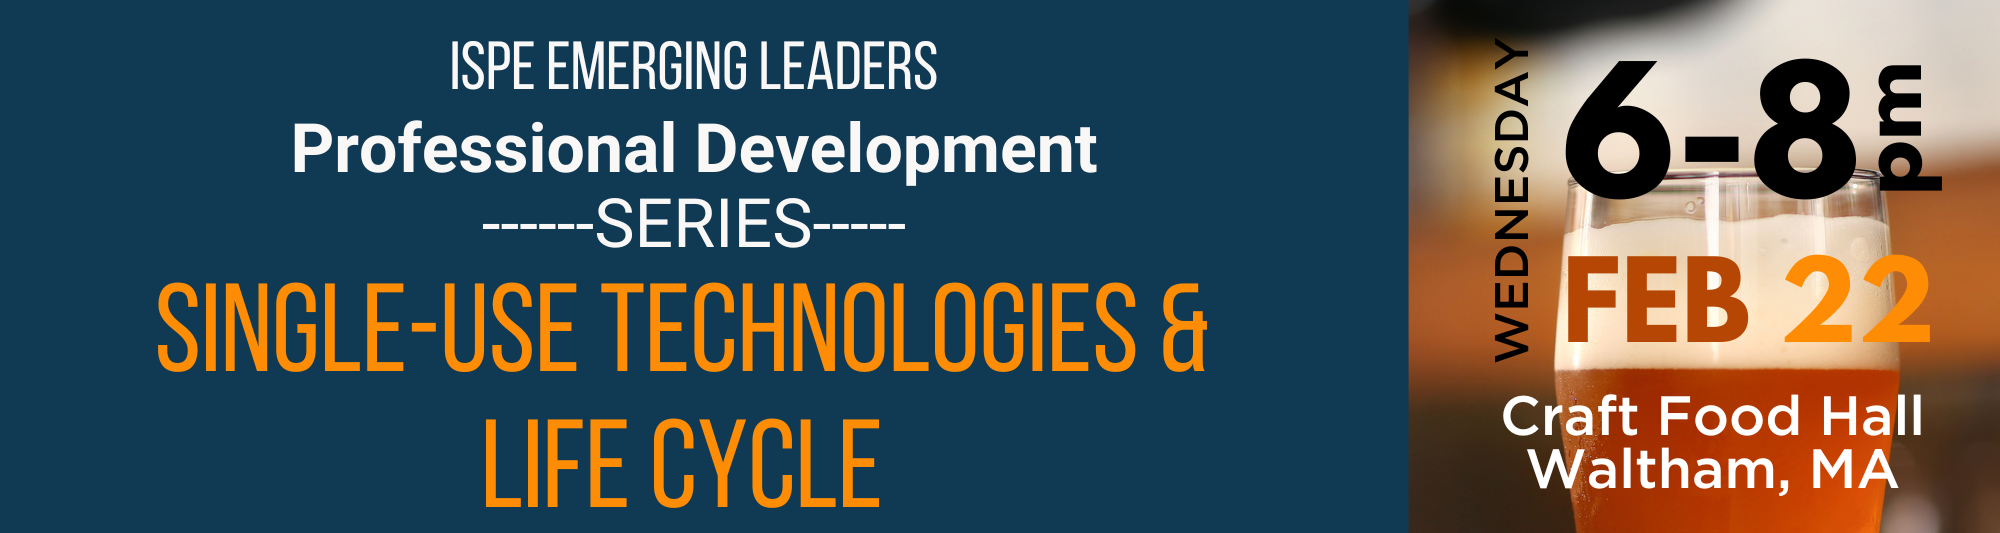 Emerging Leaders Professional Development Series